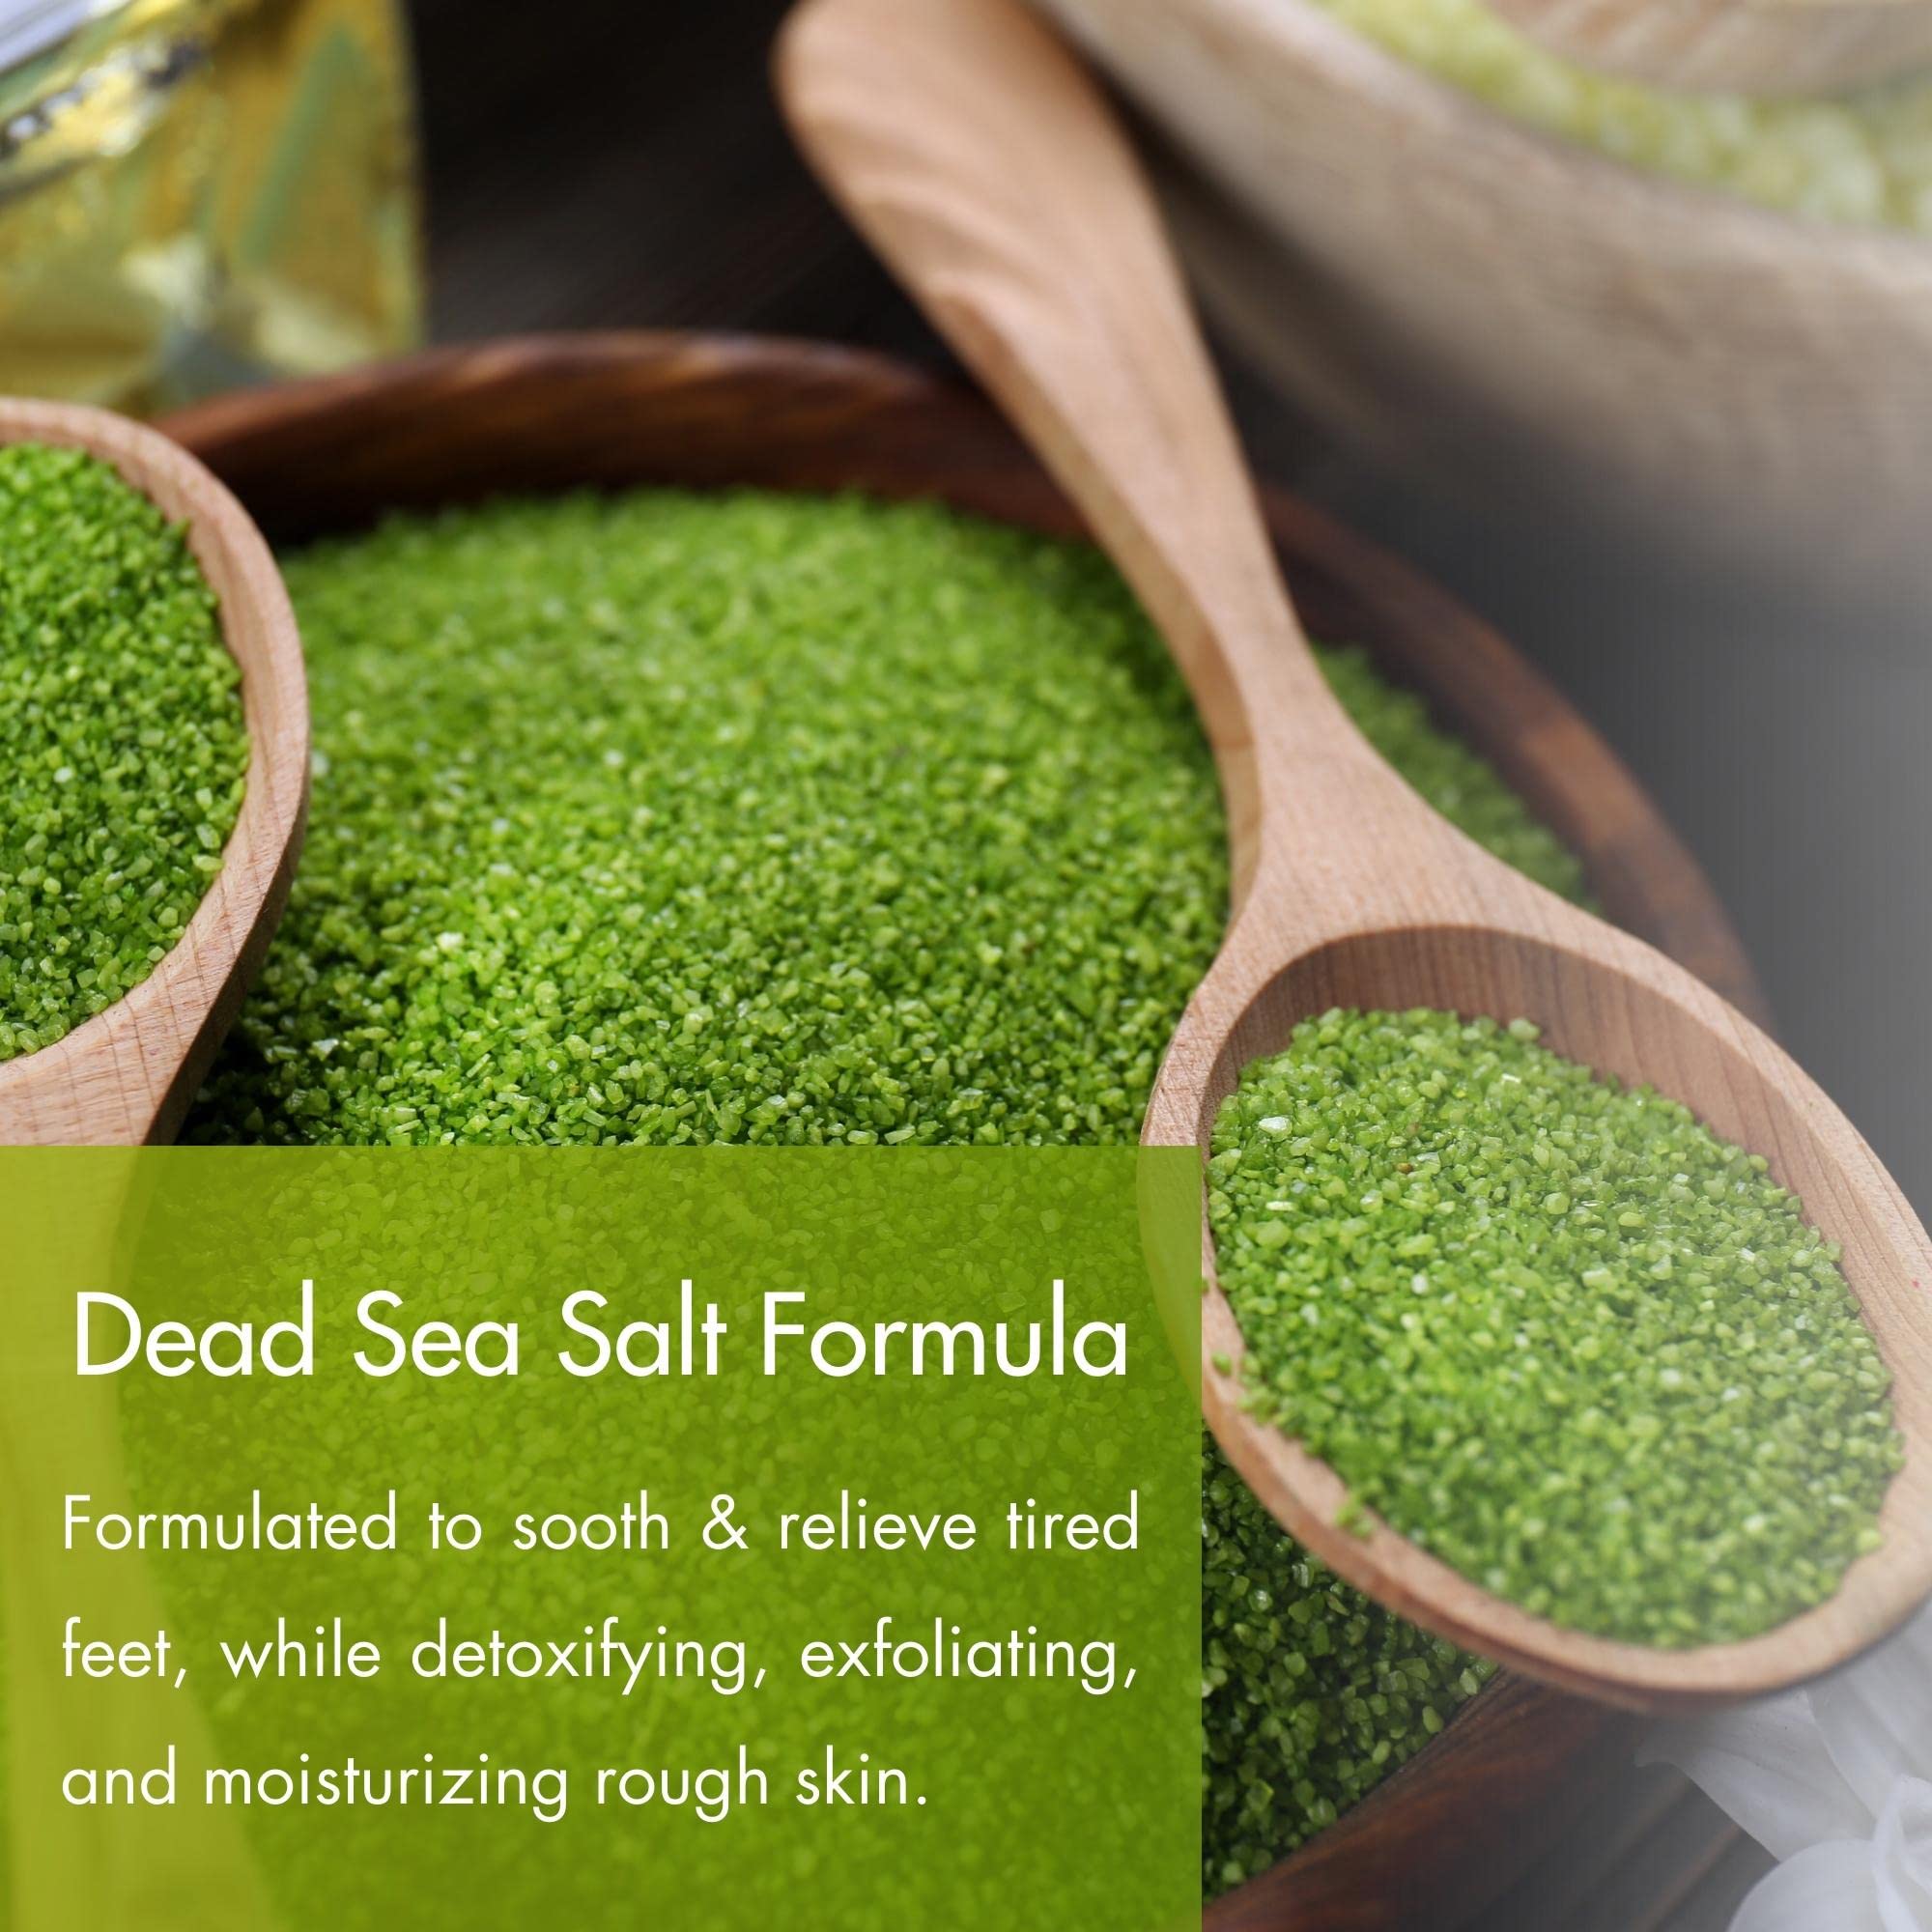 SPA REDI - Detox Foot Soak Pedicure and Bath Fine Salt, Green Tea, 128 Oz - Made with Dead Sea Salts, Argan Oil, Coconut Oil, and Essential Oil - Hydrates, Softens and Moisturizes